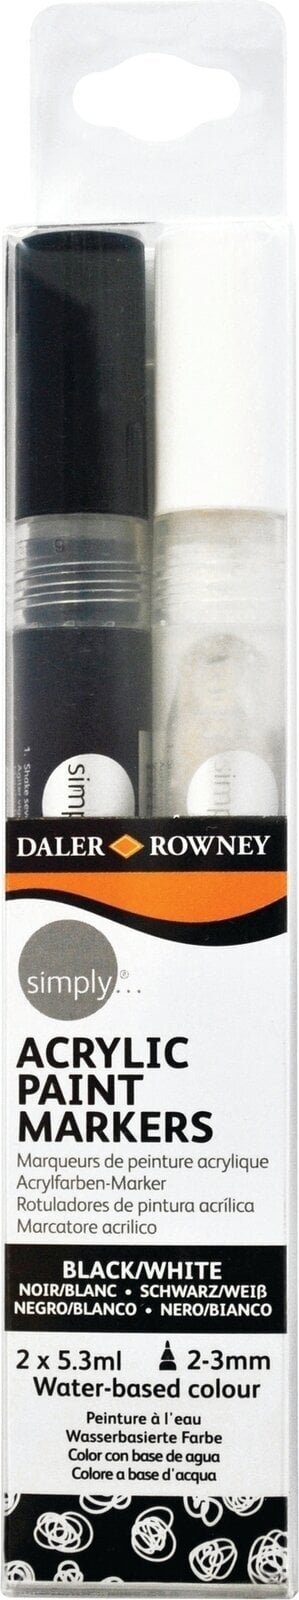 Viltstift Daler Rowney Simply Acrylic Marker Set acrylstiften Black/White 2 x 5,3 ml